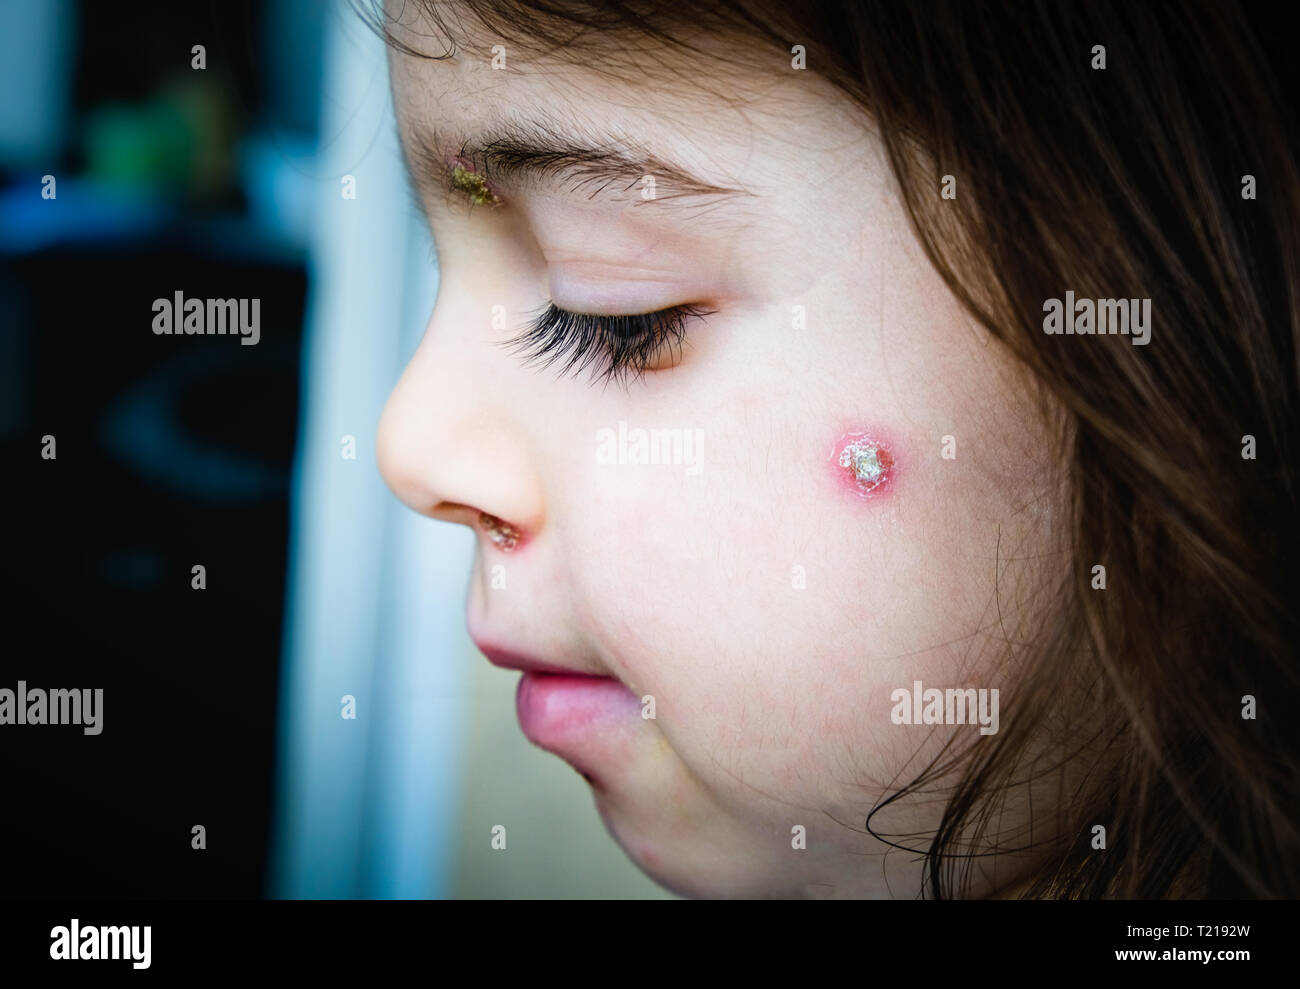 chicken pox spots baby face side cheek Stock Photo